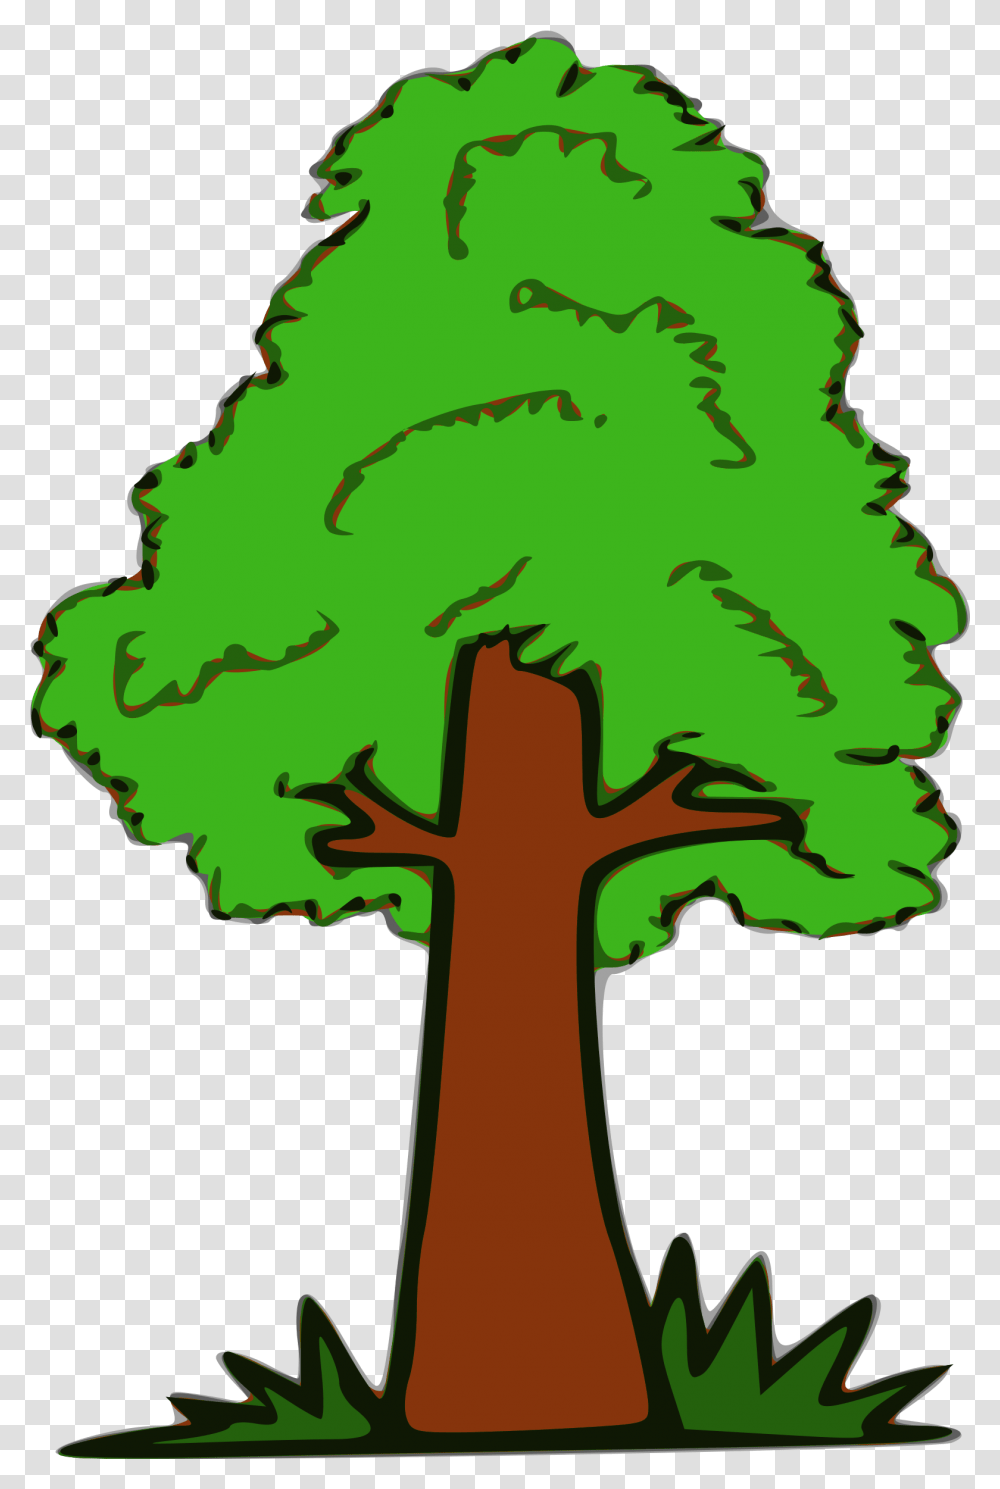 Simple Picture Of Tree Simple Picture Of Tree, Plant, Green, Moss, Vegetation Transparent Png